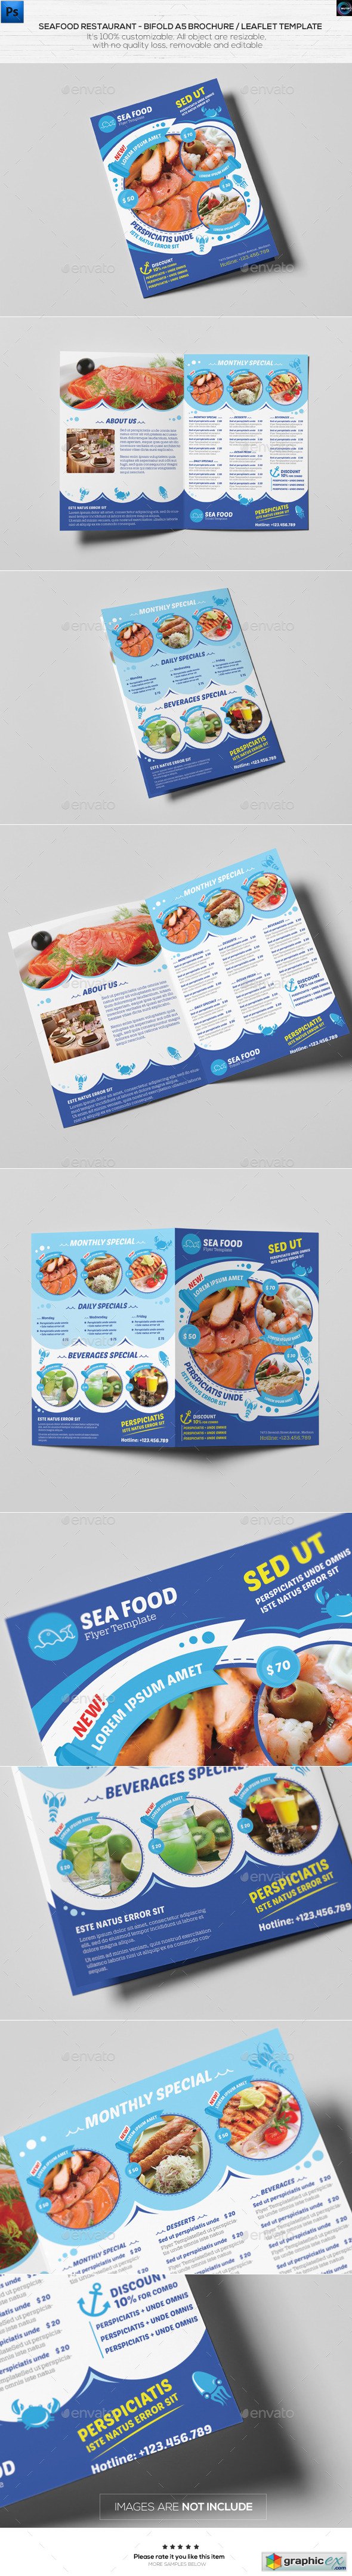 Seafood Restaurant-A5 Brochure/Leaflet Template